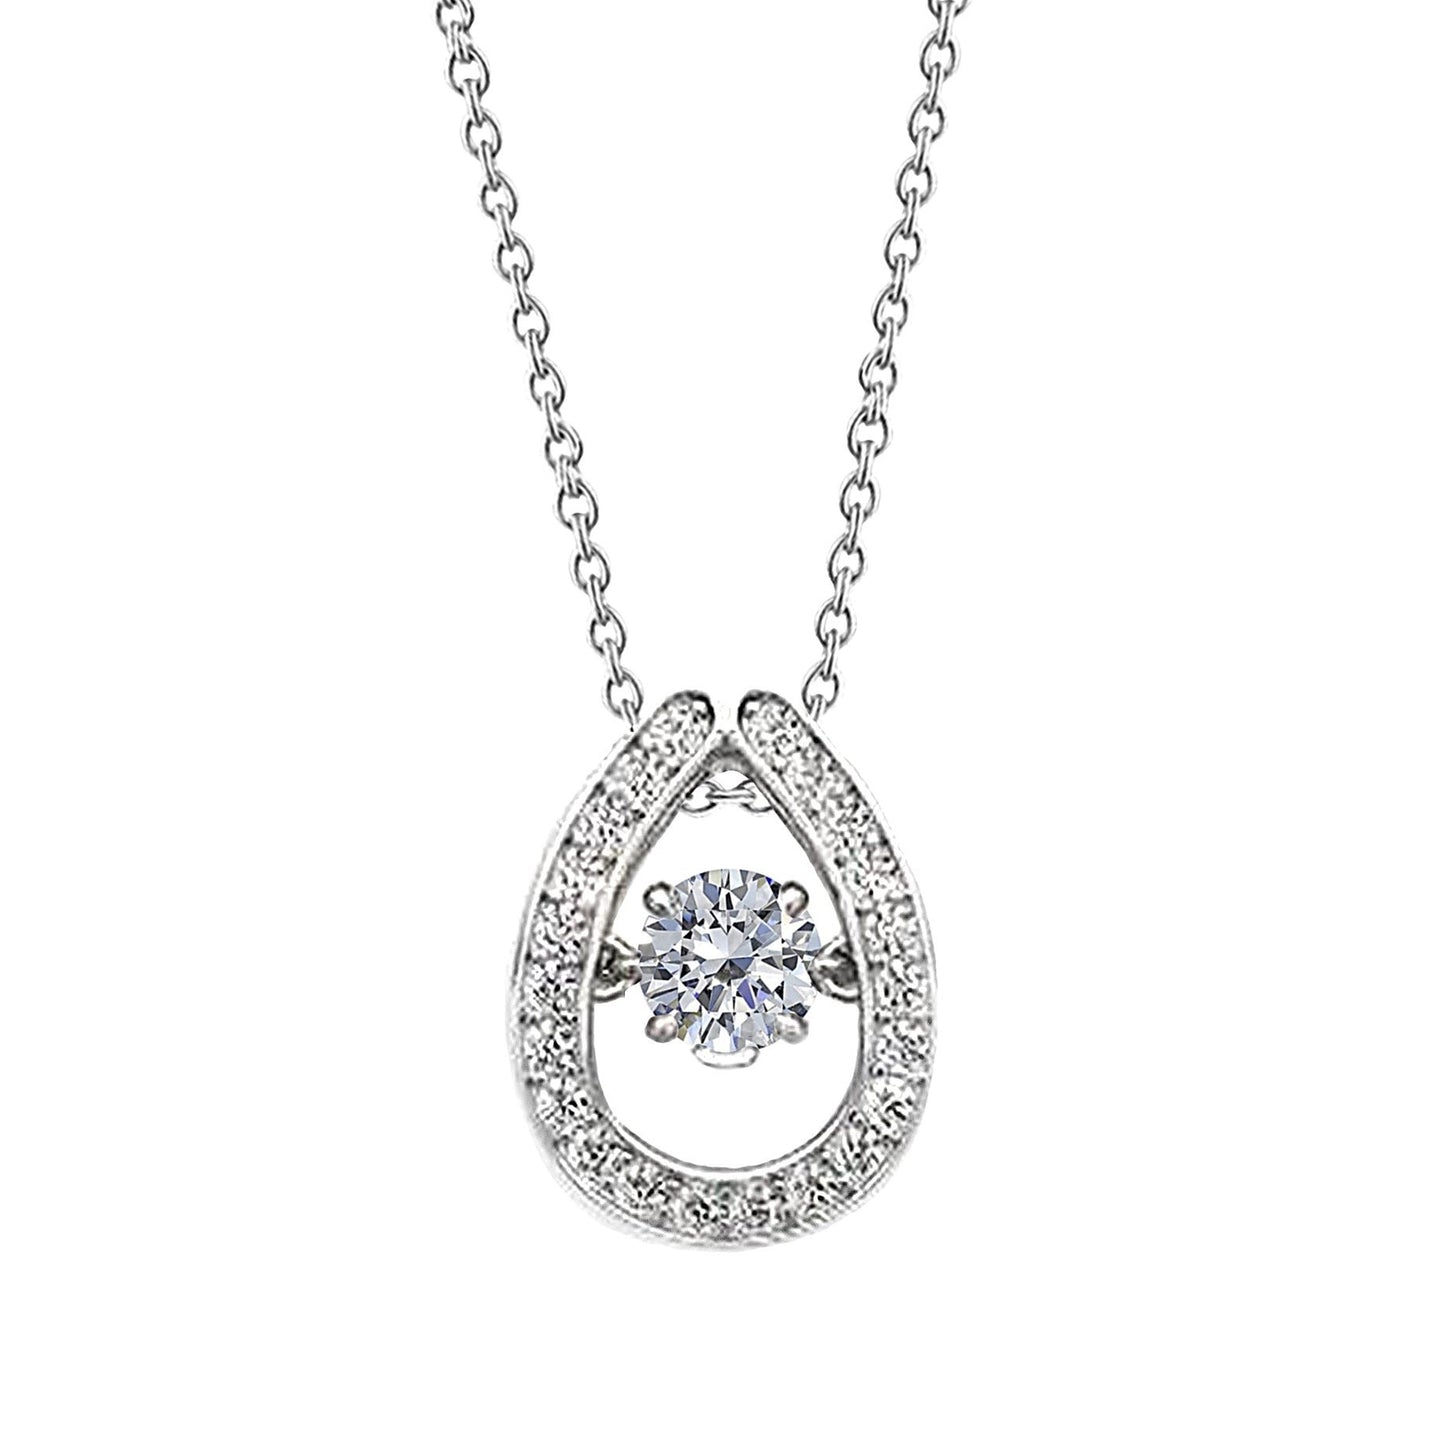 Genuine Round Diamond Pendant Necklace 2 Ct Solid White Gold 14K Jewelry